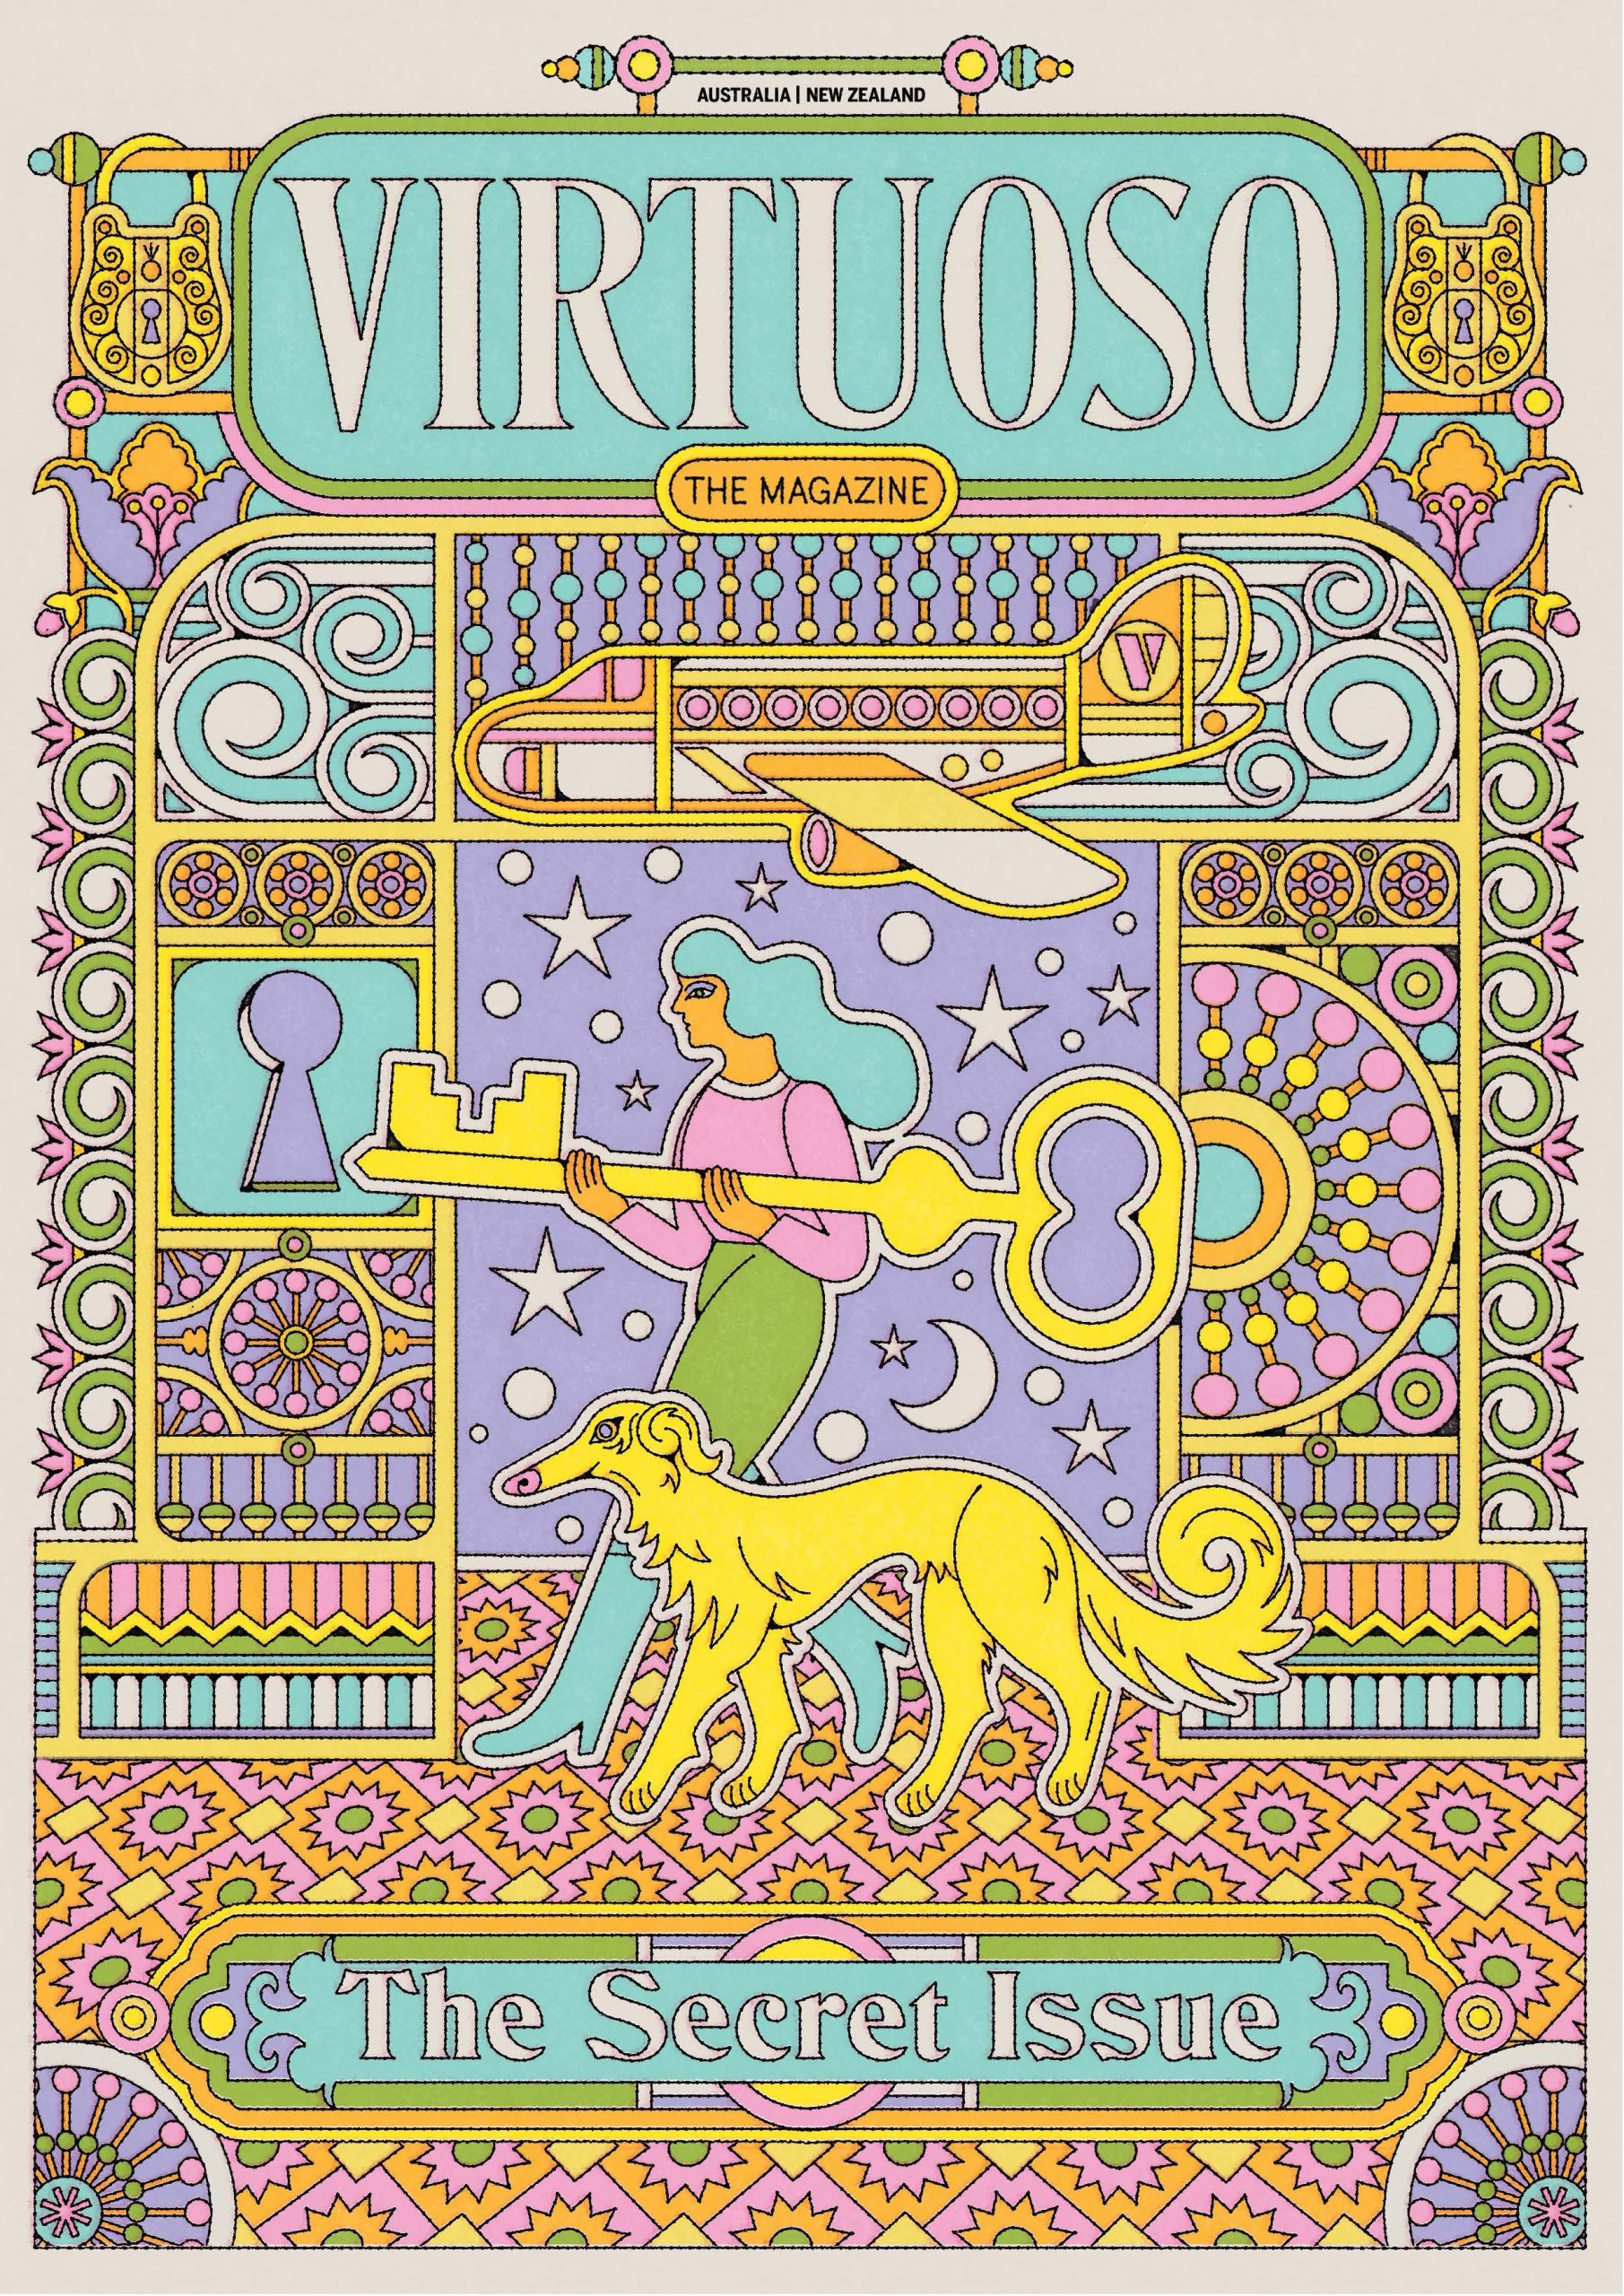 Virtuoso, The Magazine Australia & New Zealand: The Secret Issue